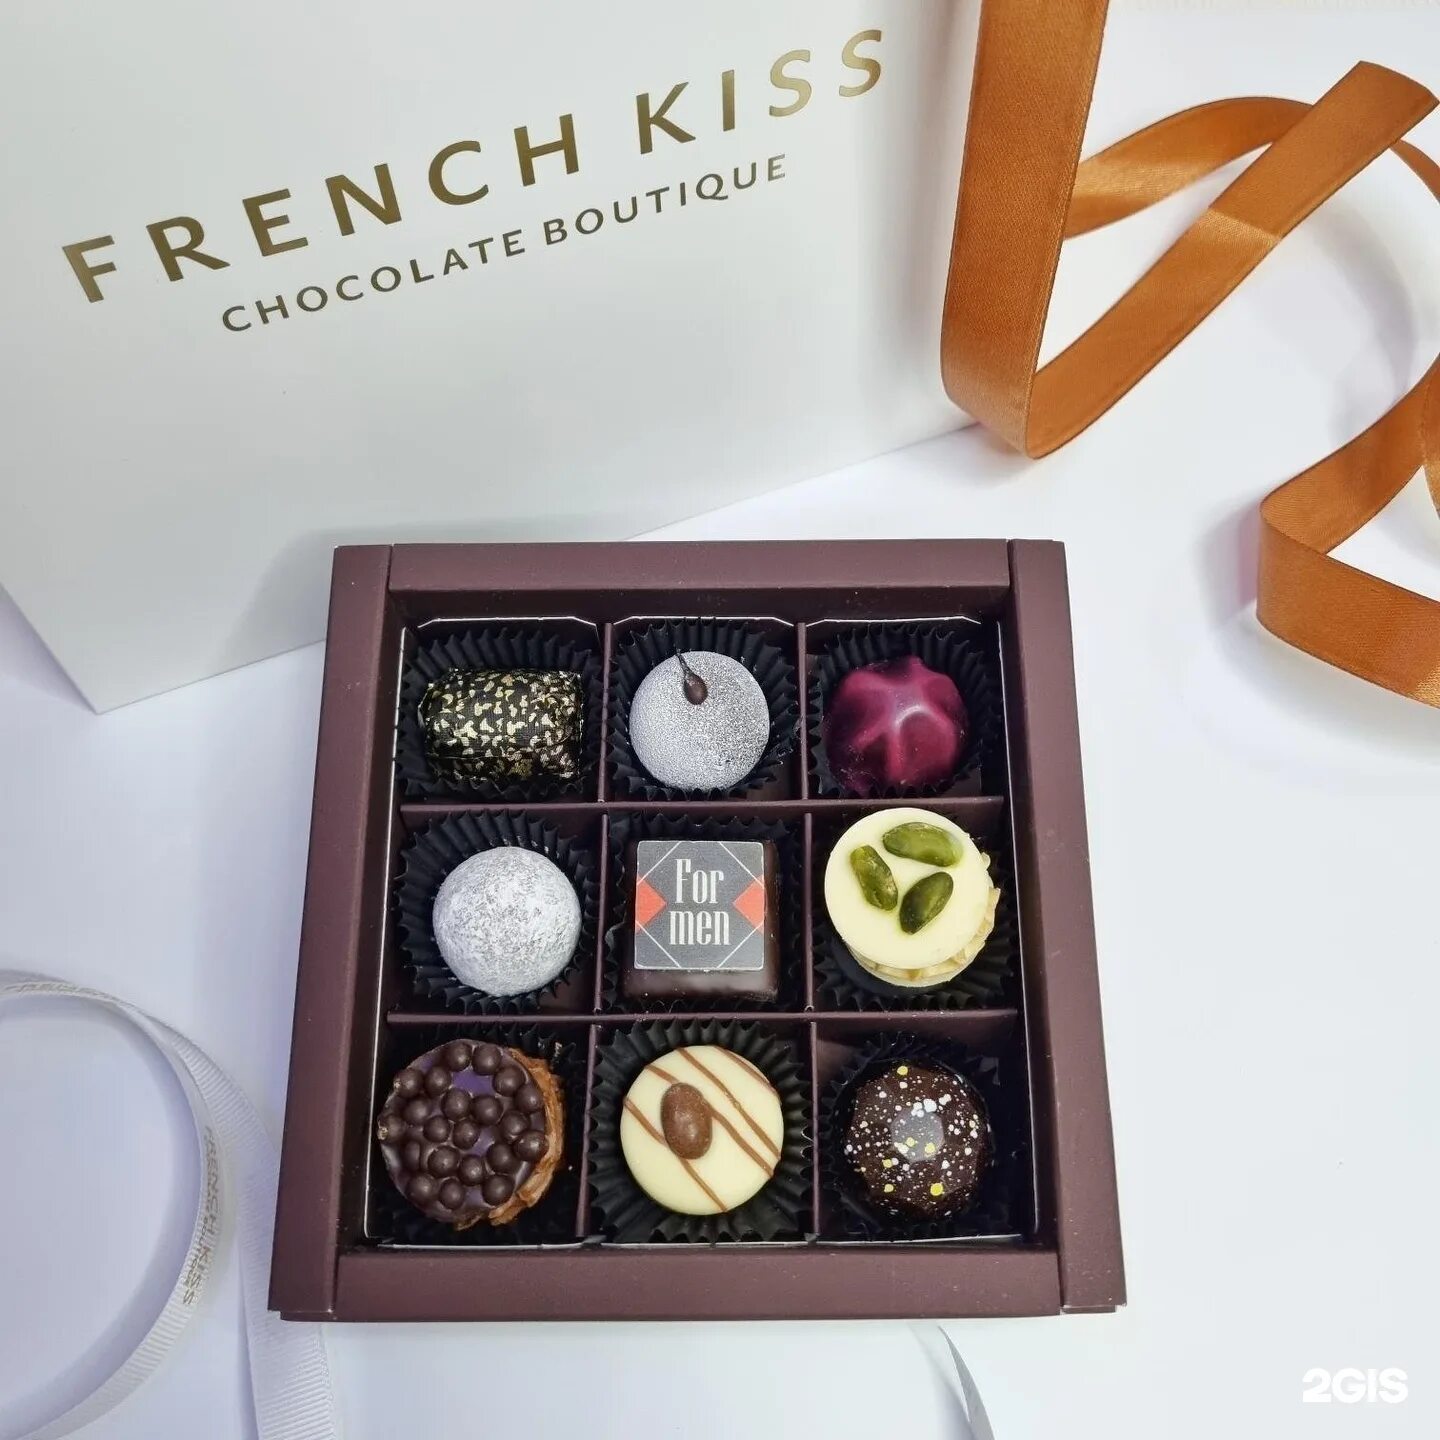 Конфеты French Kiss Chocolate Boutique. Френч Кисс конфеты ассорти. French Kiss шоколадный бутик. French Kiss Chocolate Горький. French kiss шоколадный